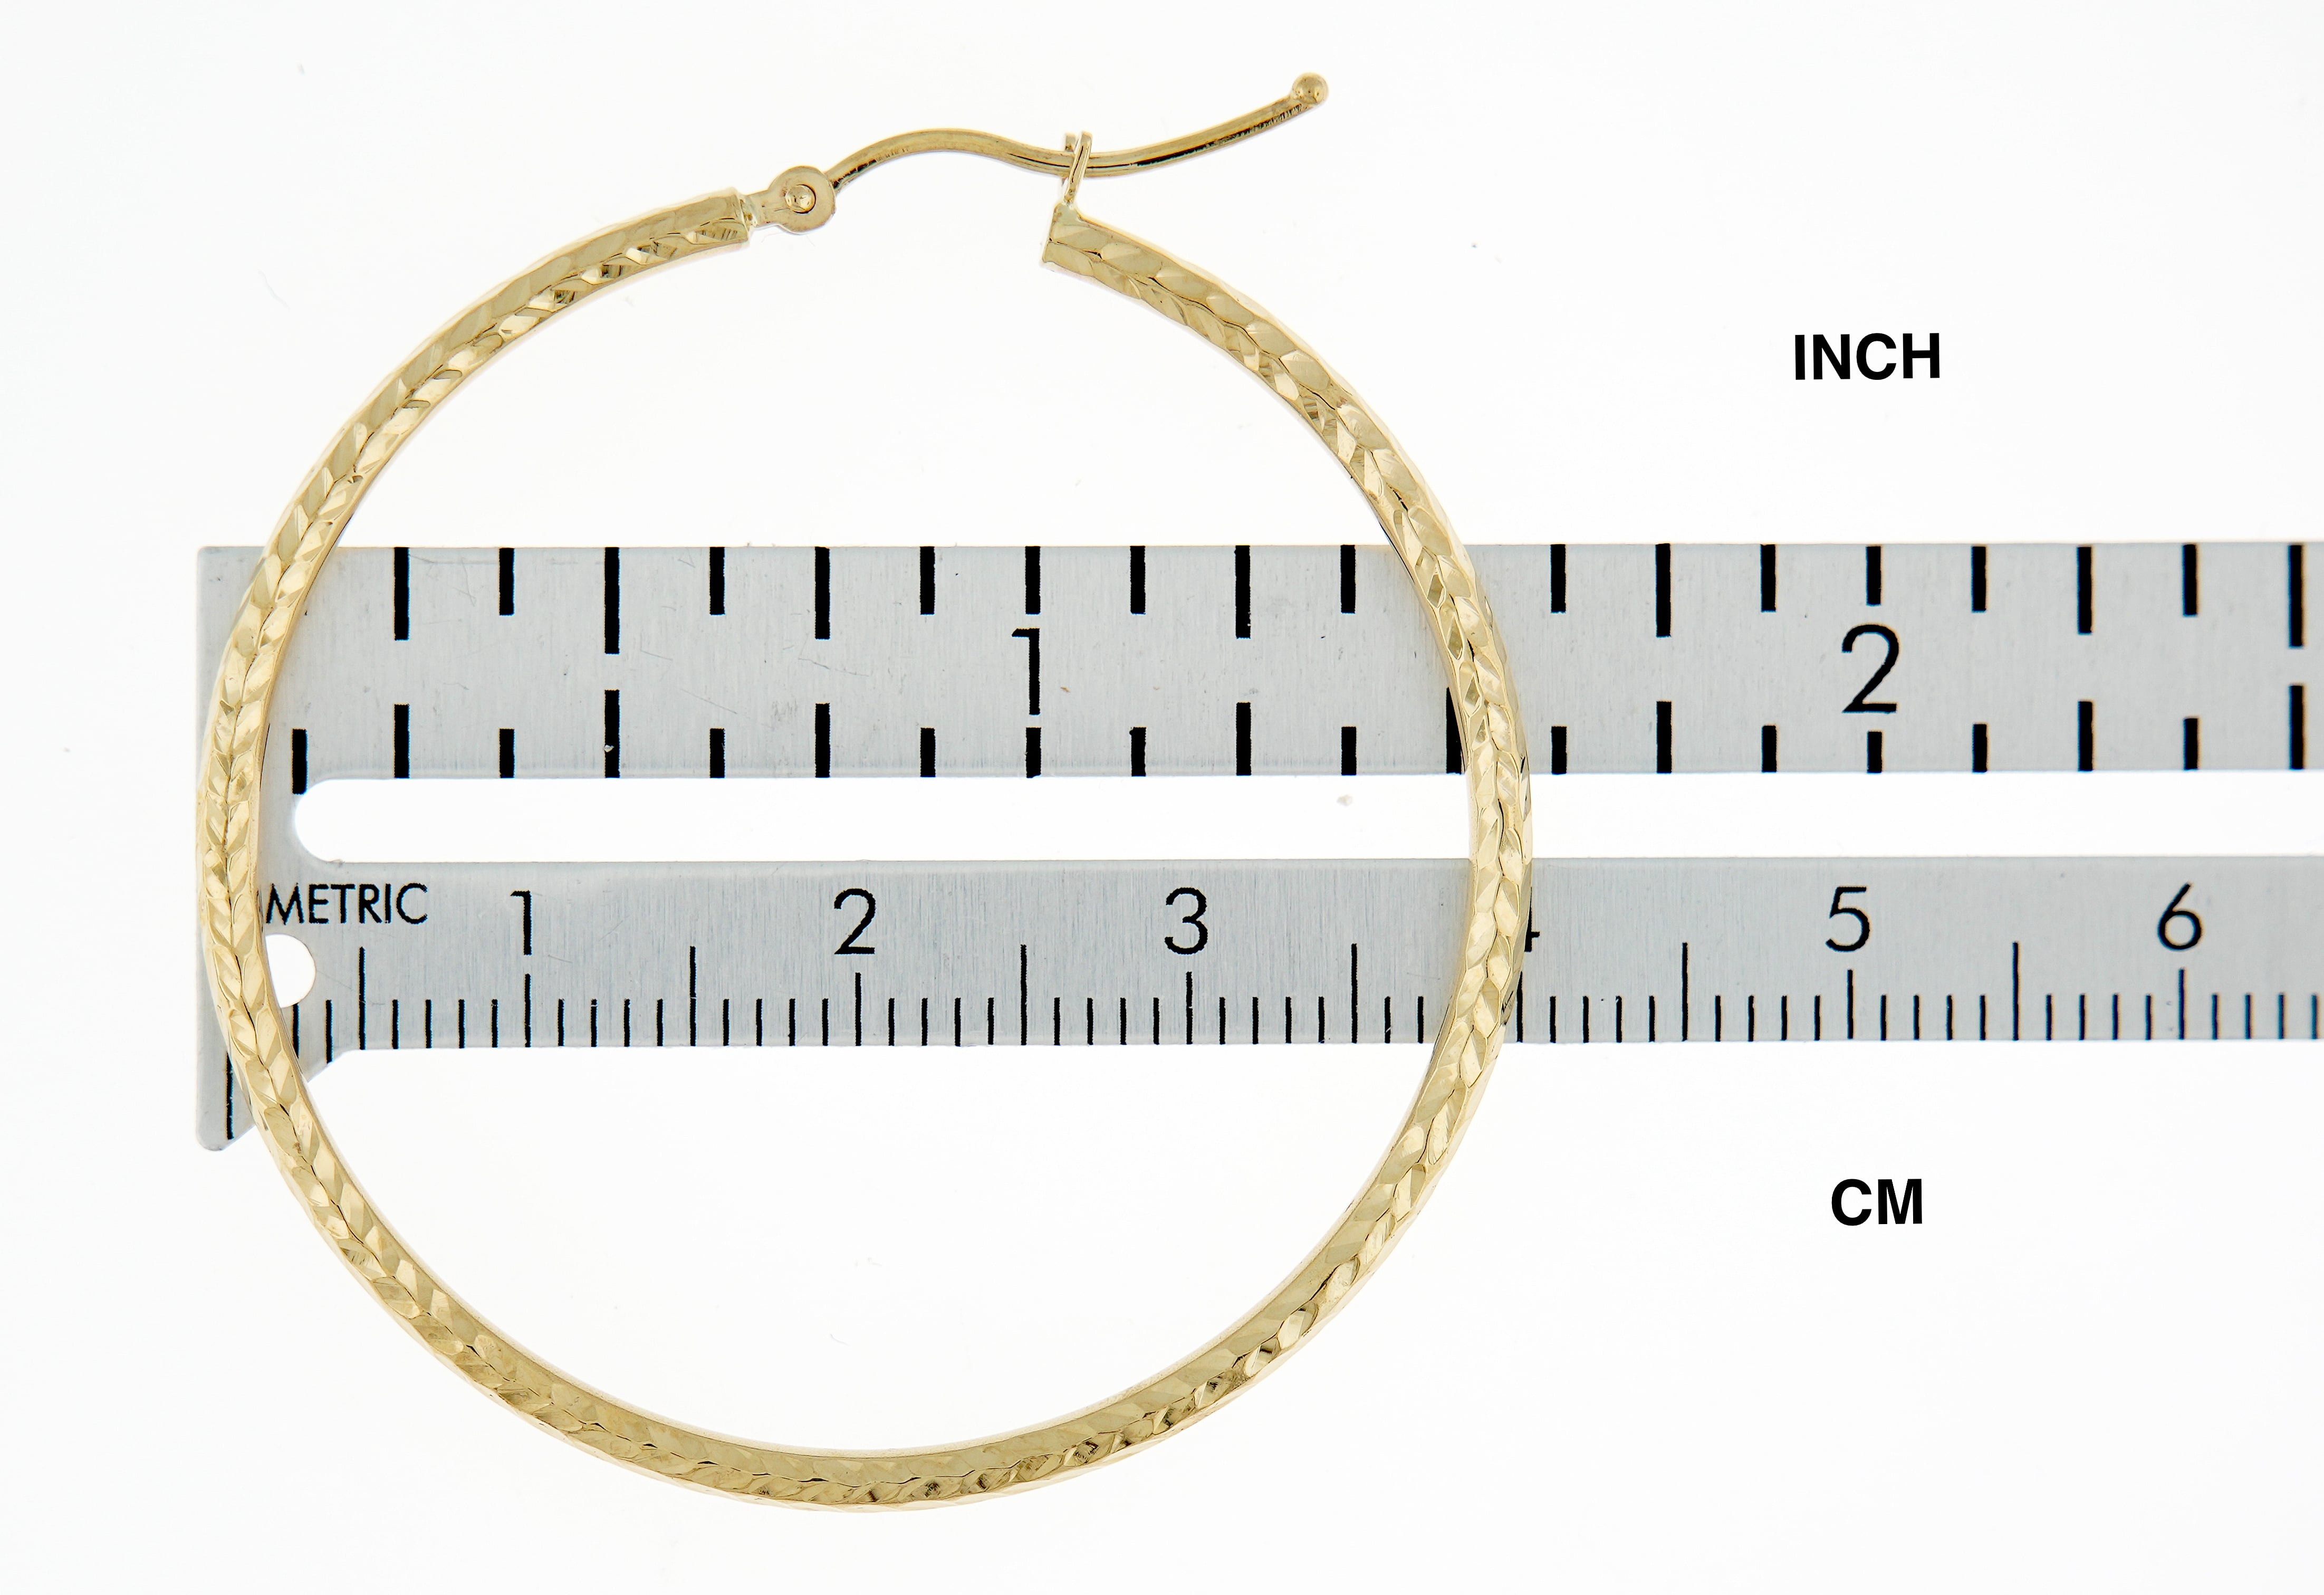 14K Yellow Gold Diamond Cut Round Hoop Textured Earrings 40mm x 2mm